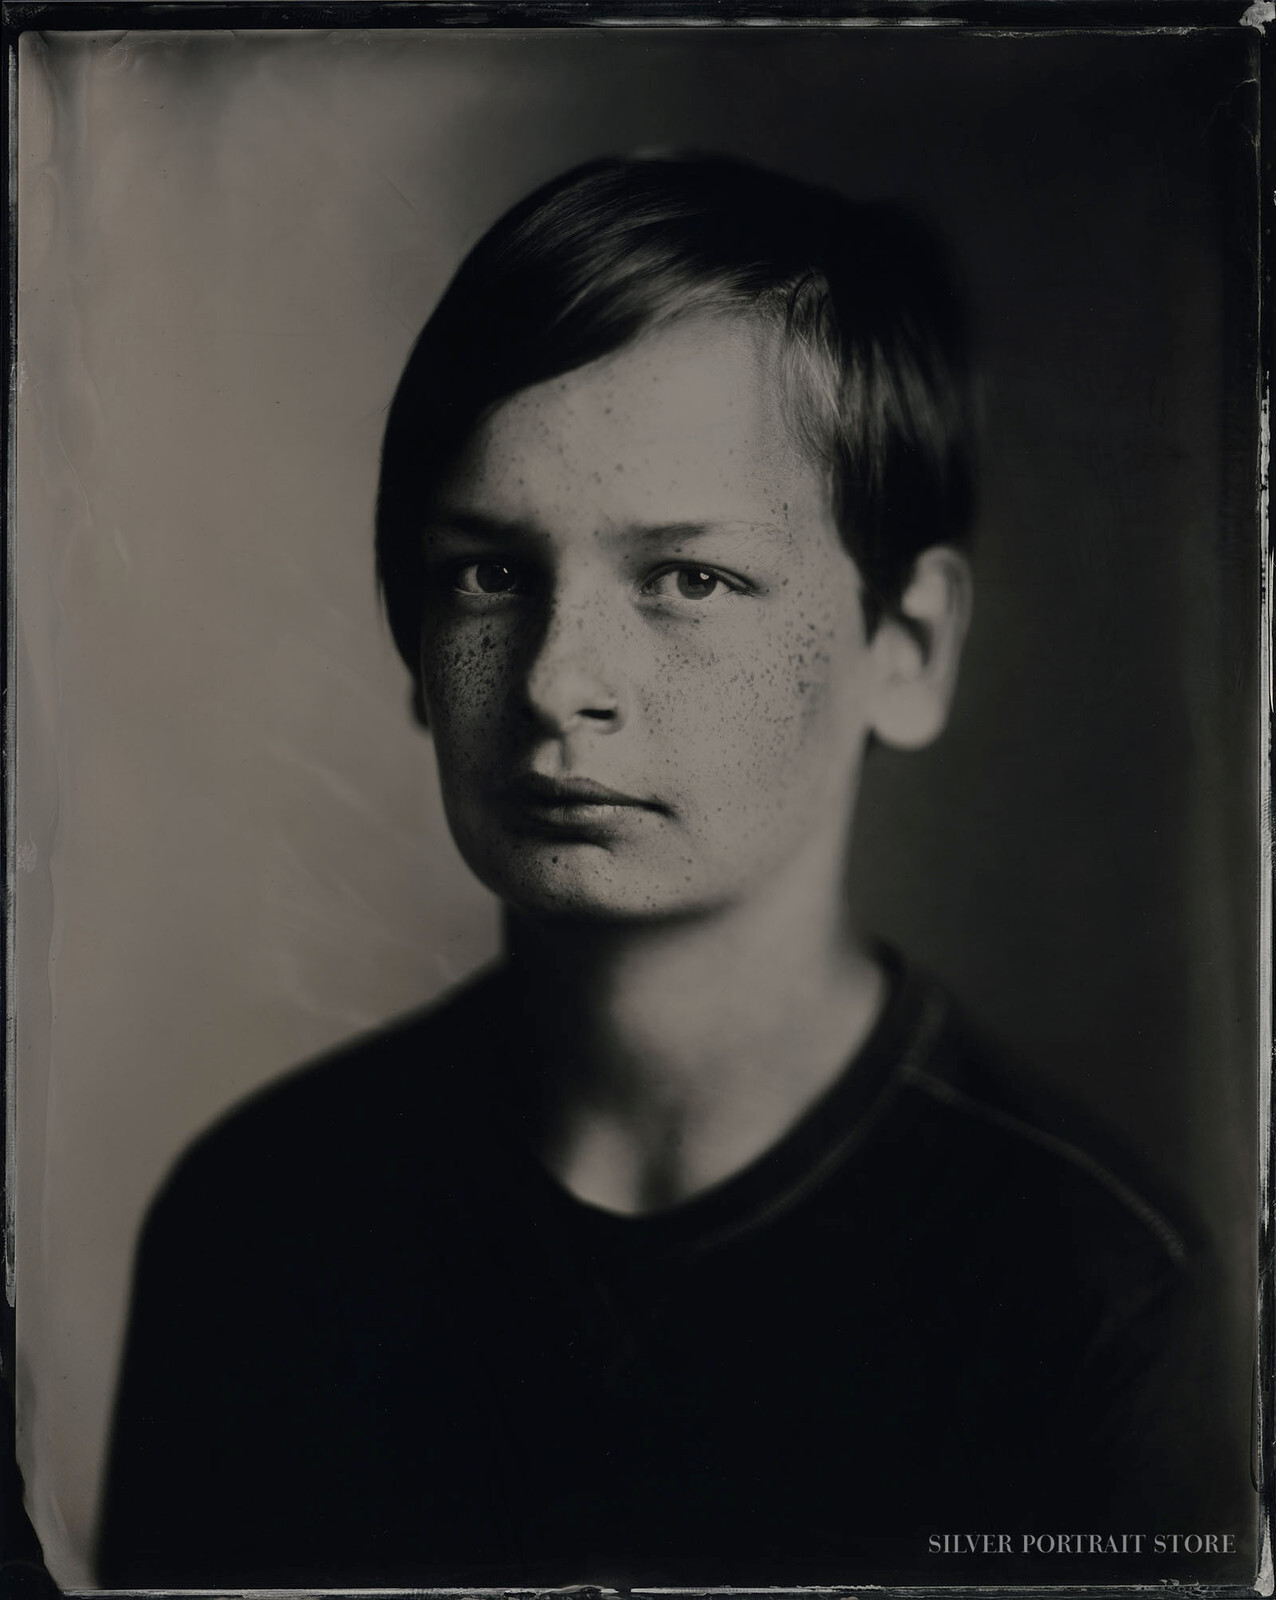 Darius-Silver Portrait Store-Wet plate collodion-Tintype 20 x 25 cm.